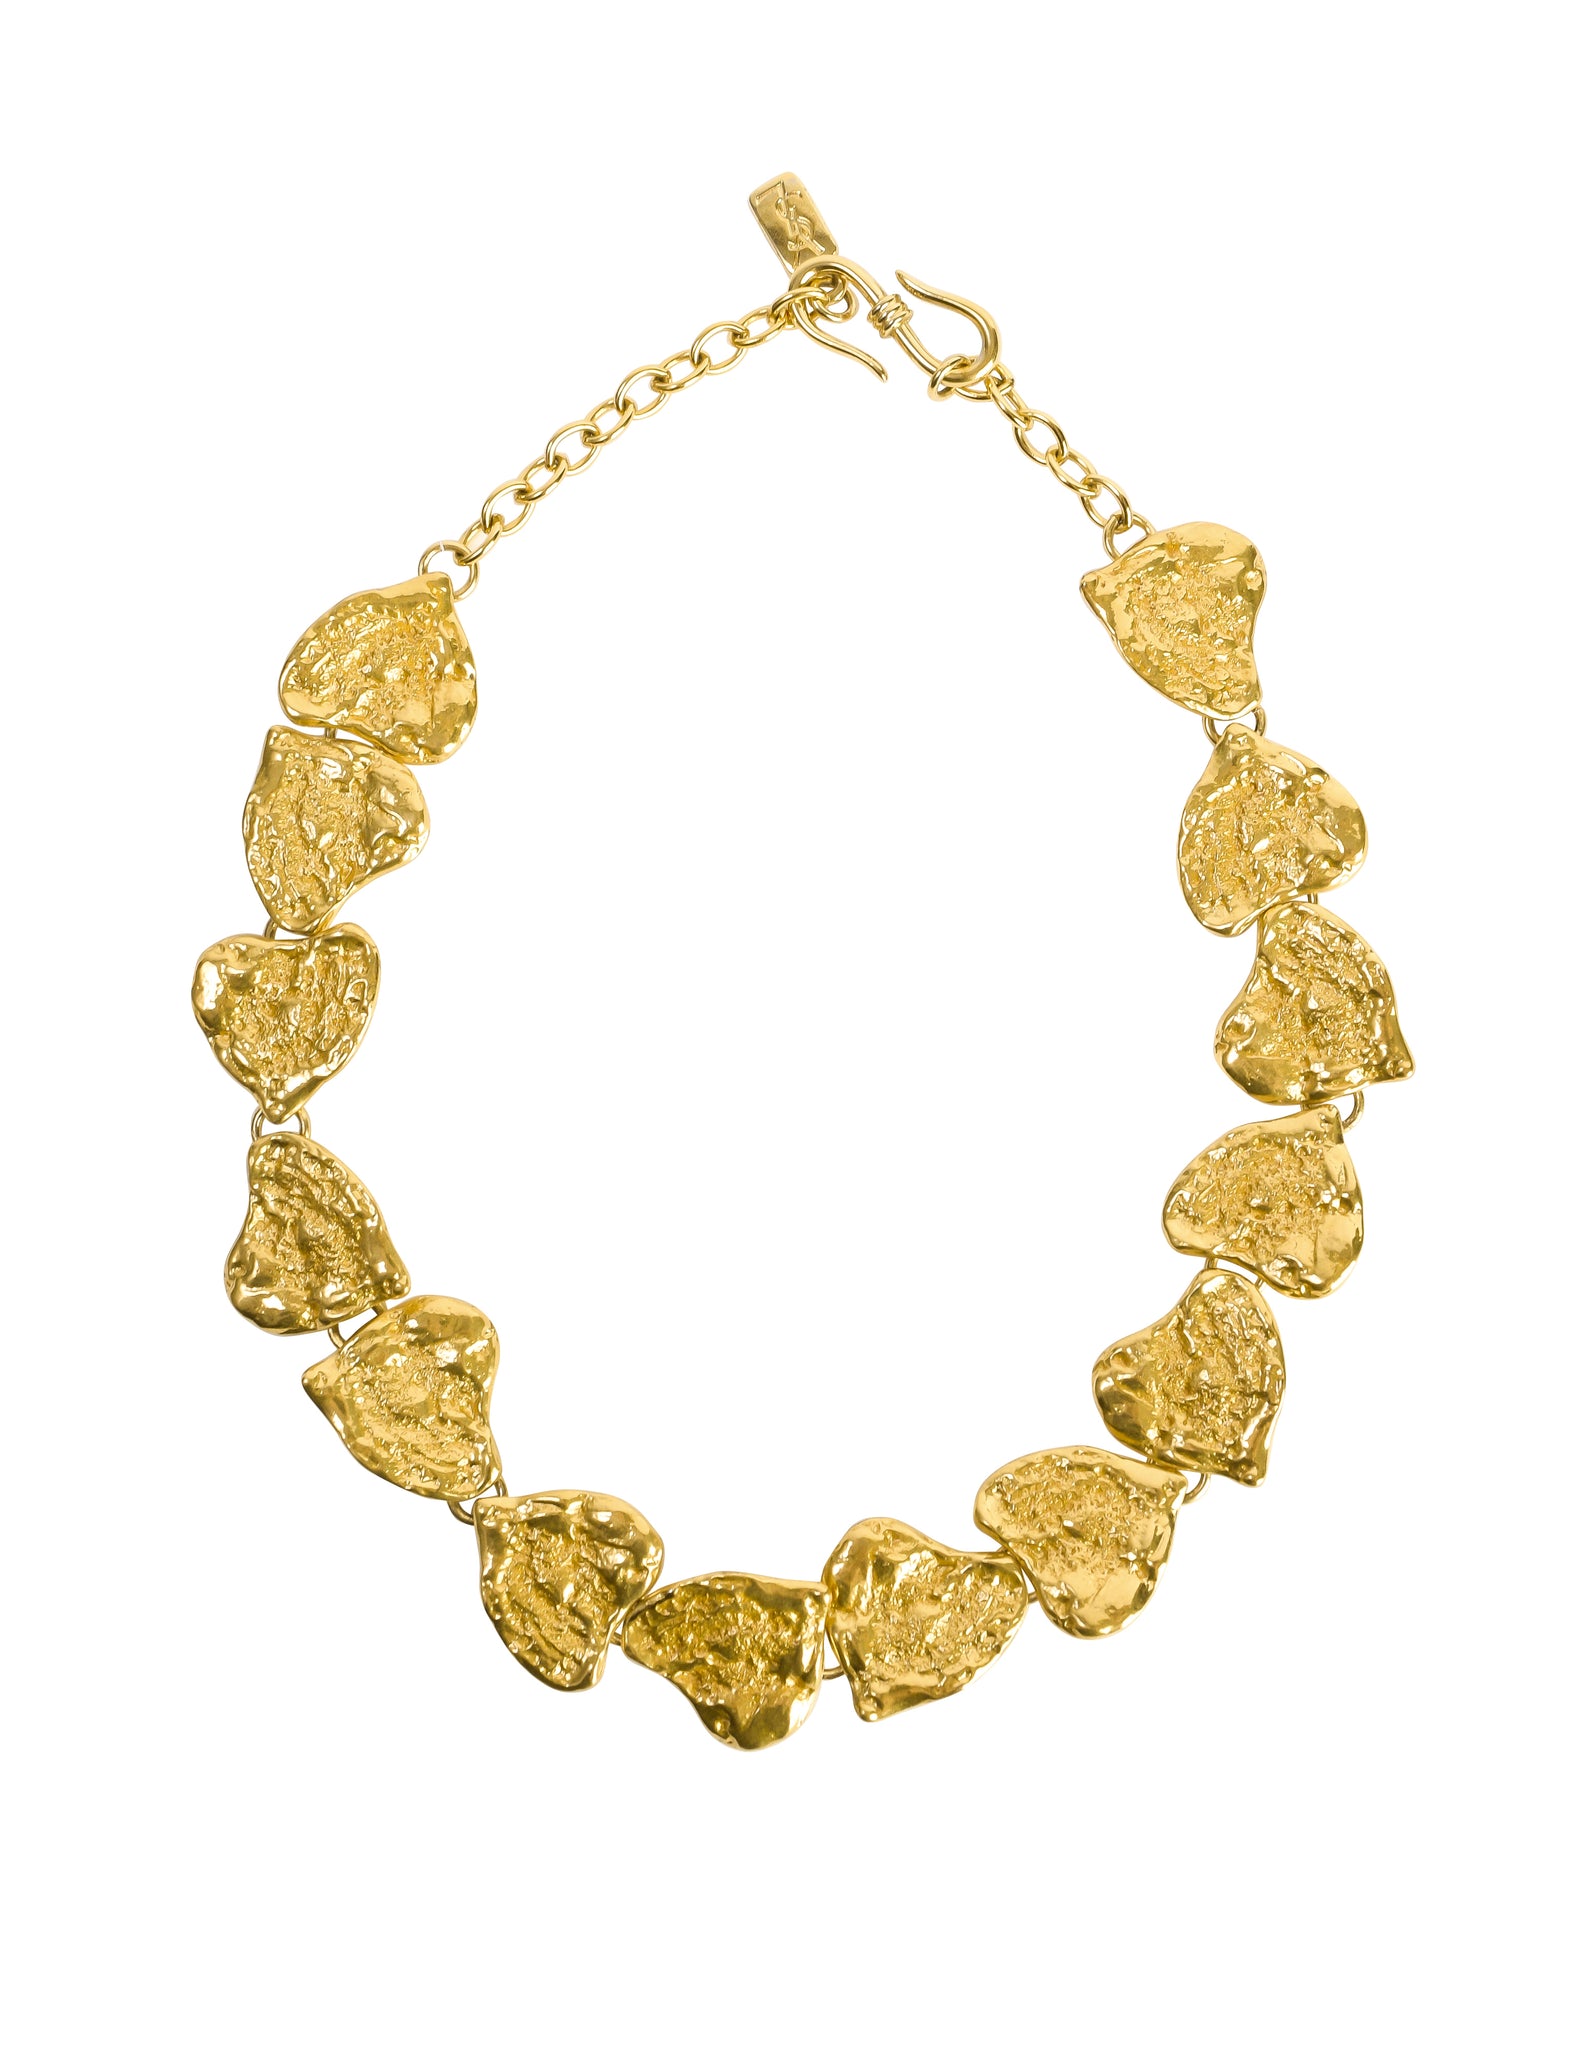 Yves Saint Laurent Vintage Gold Hammered Textured Heart Necklace